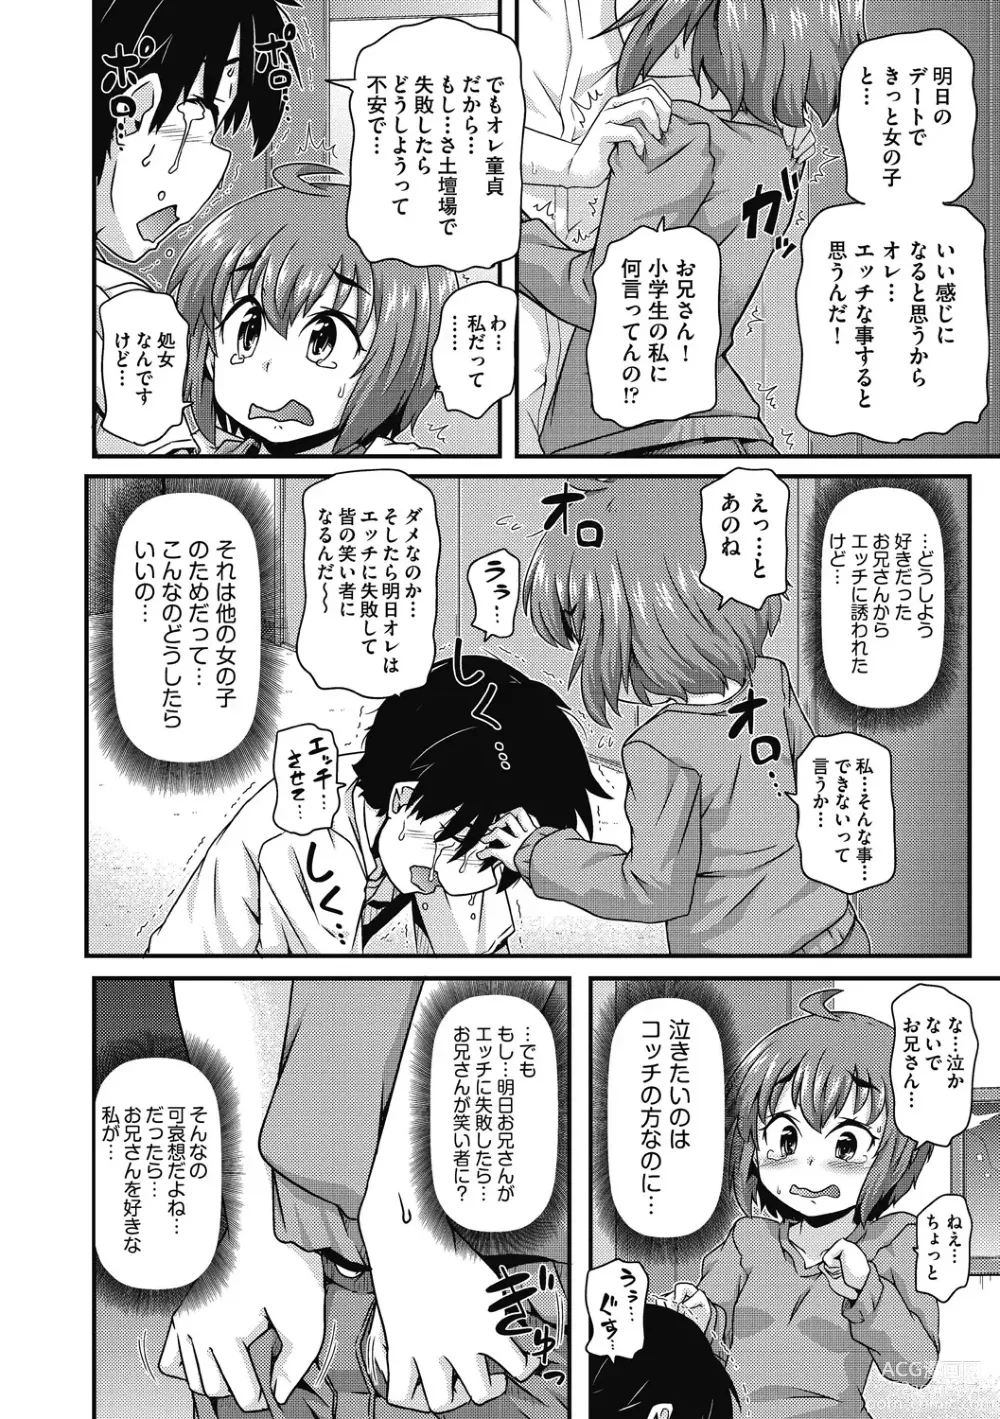 Page 24 of manga Chiisame Vacance